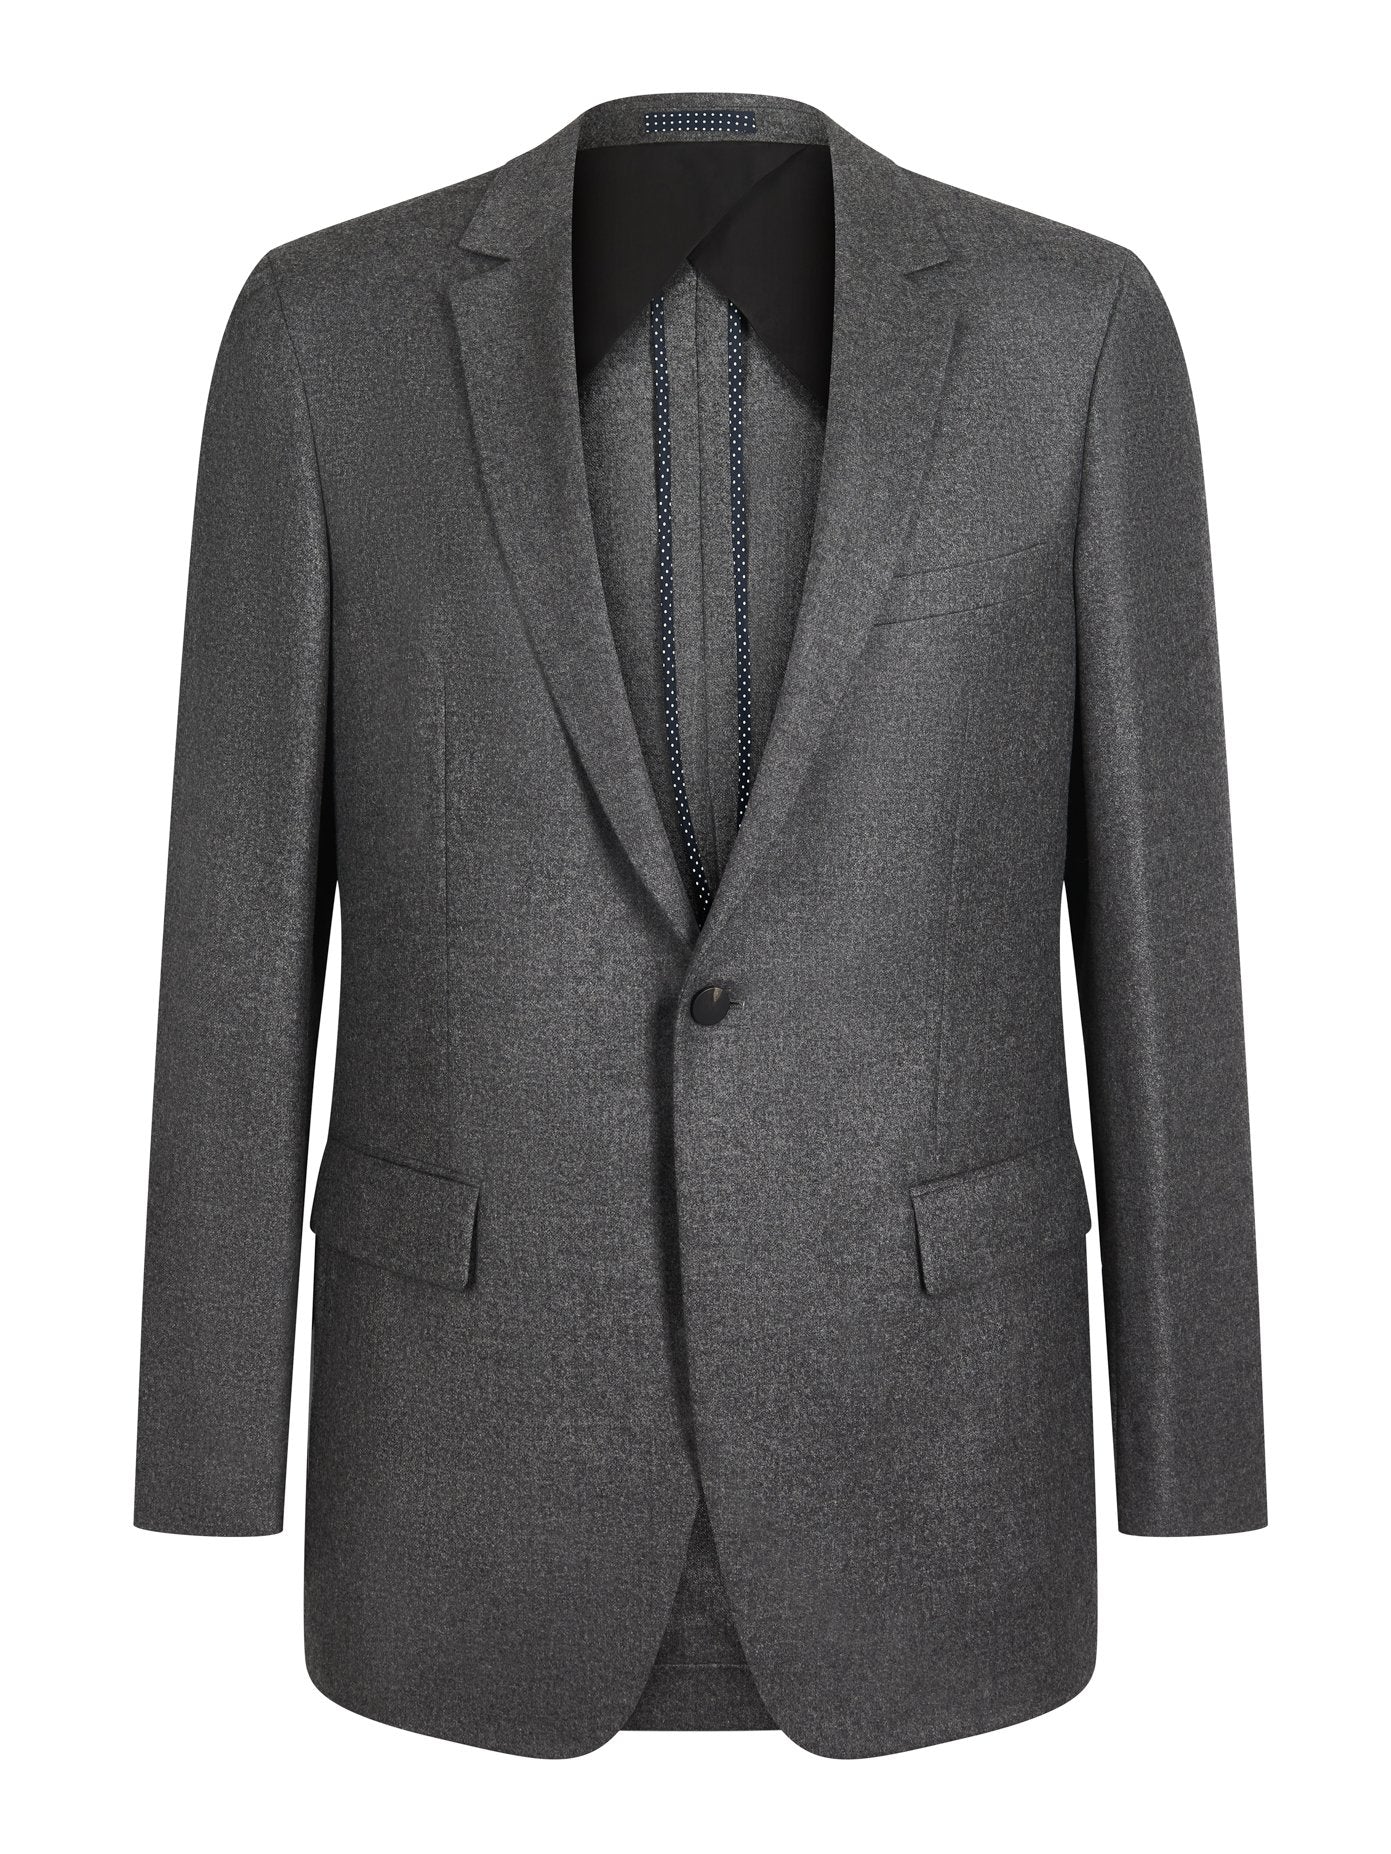 SB1 KG Single Breasted Jacket Grey | Kilgour Tailoring Savile Row